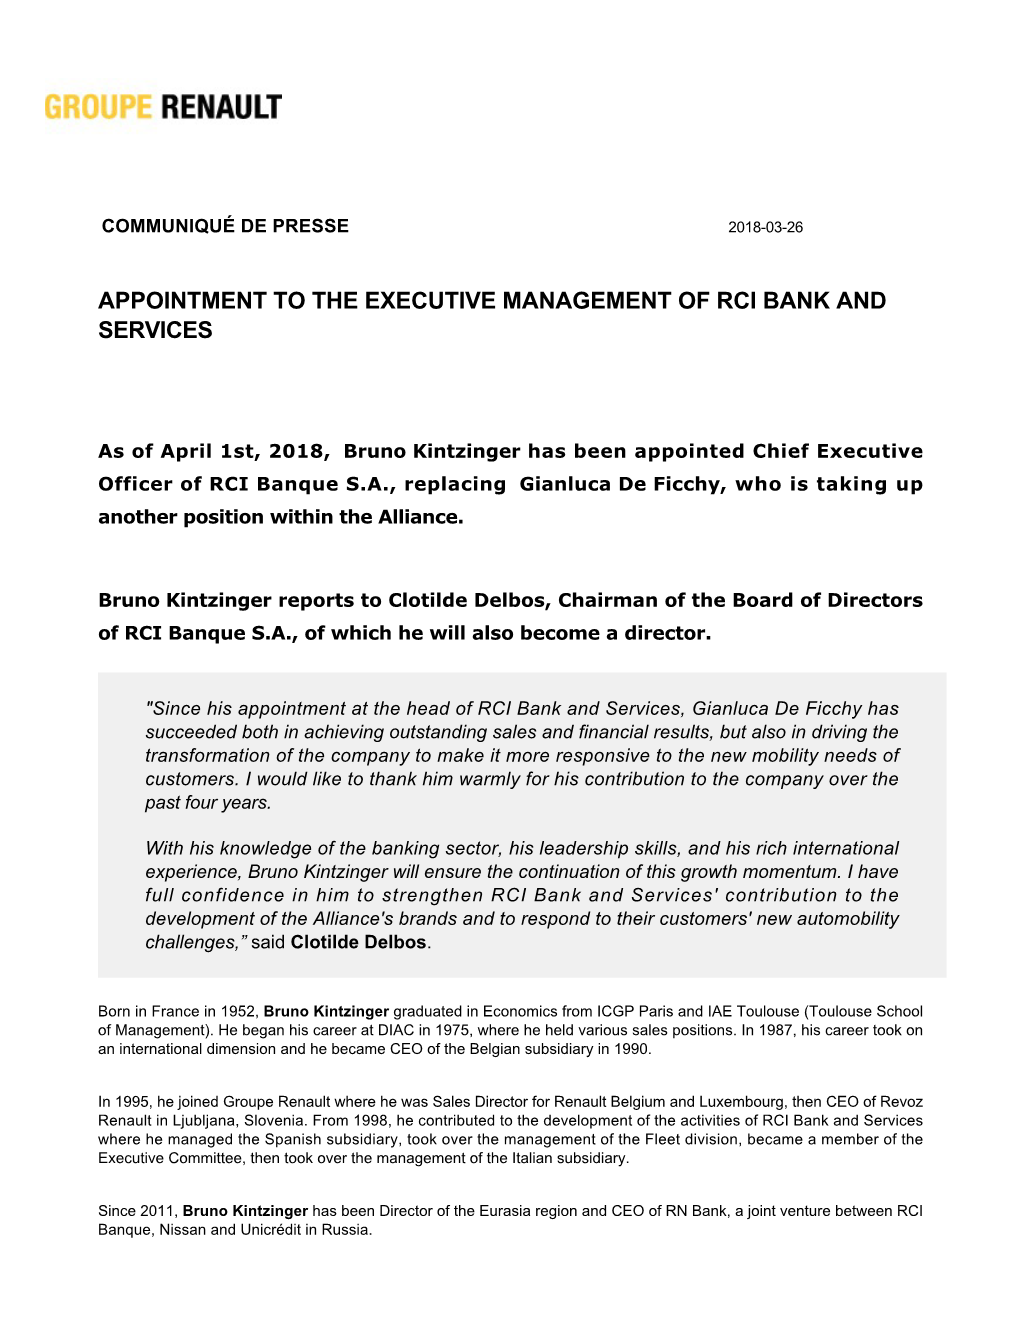 About RCI Banque SA